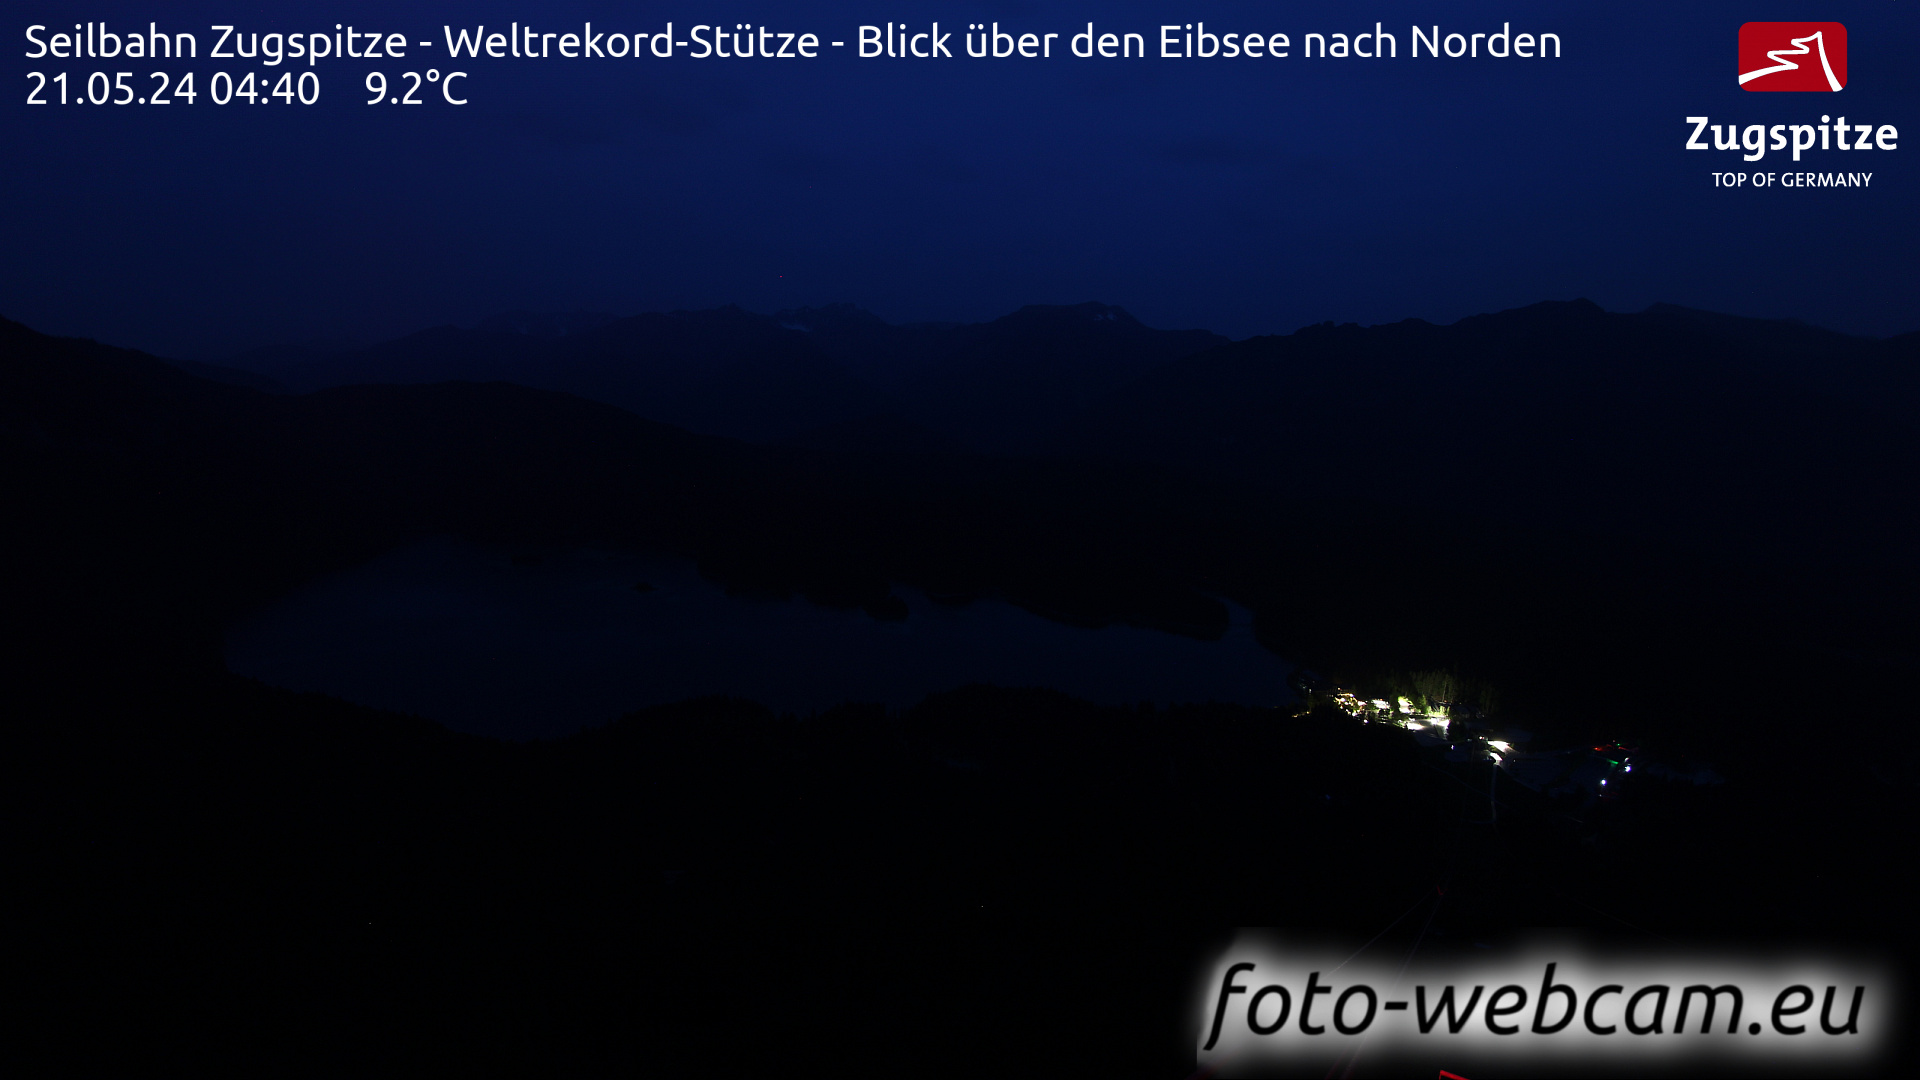 Zugspitze Ons. 04:49